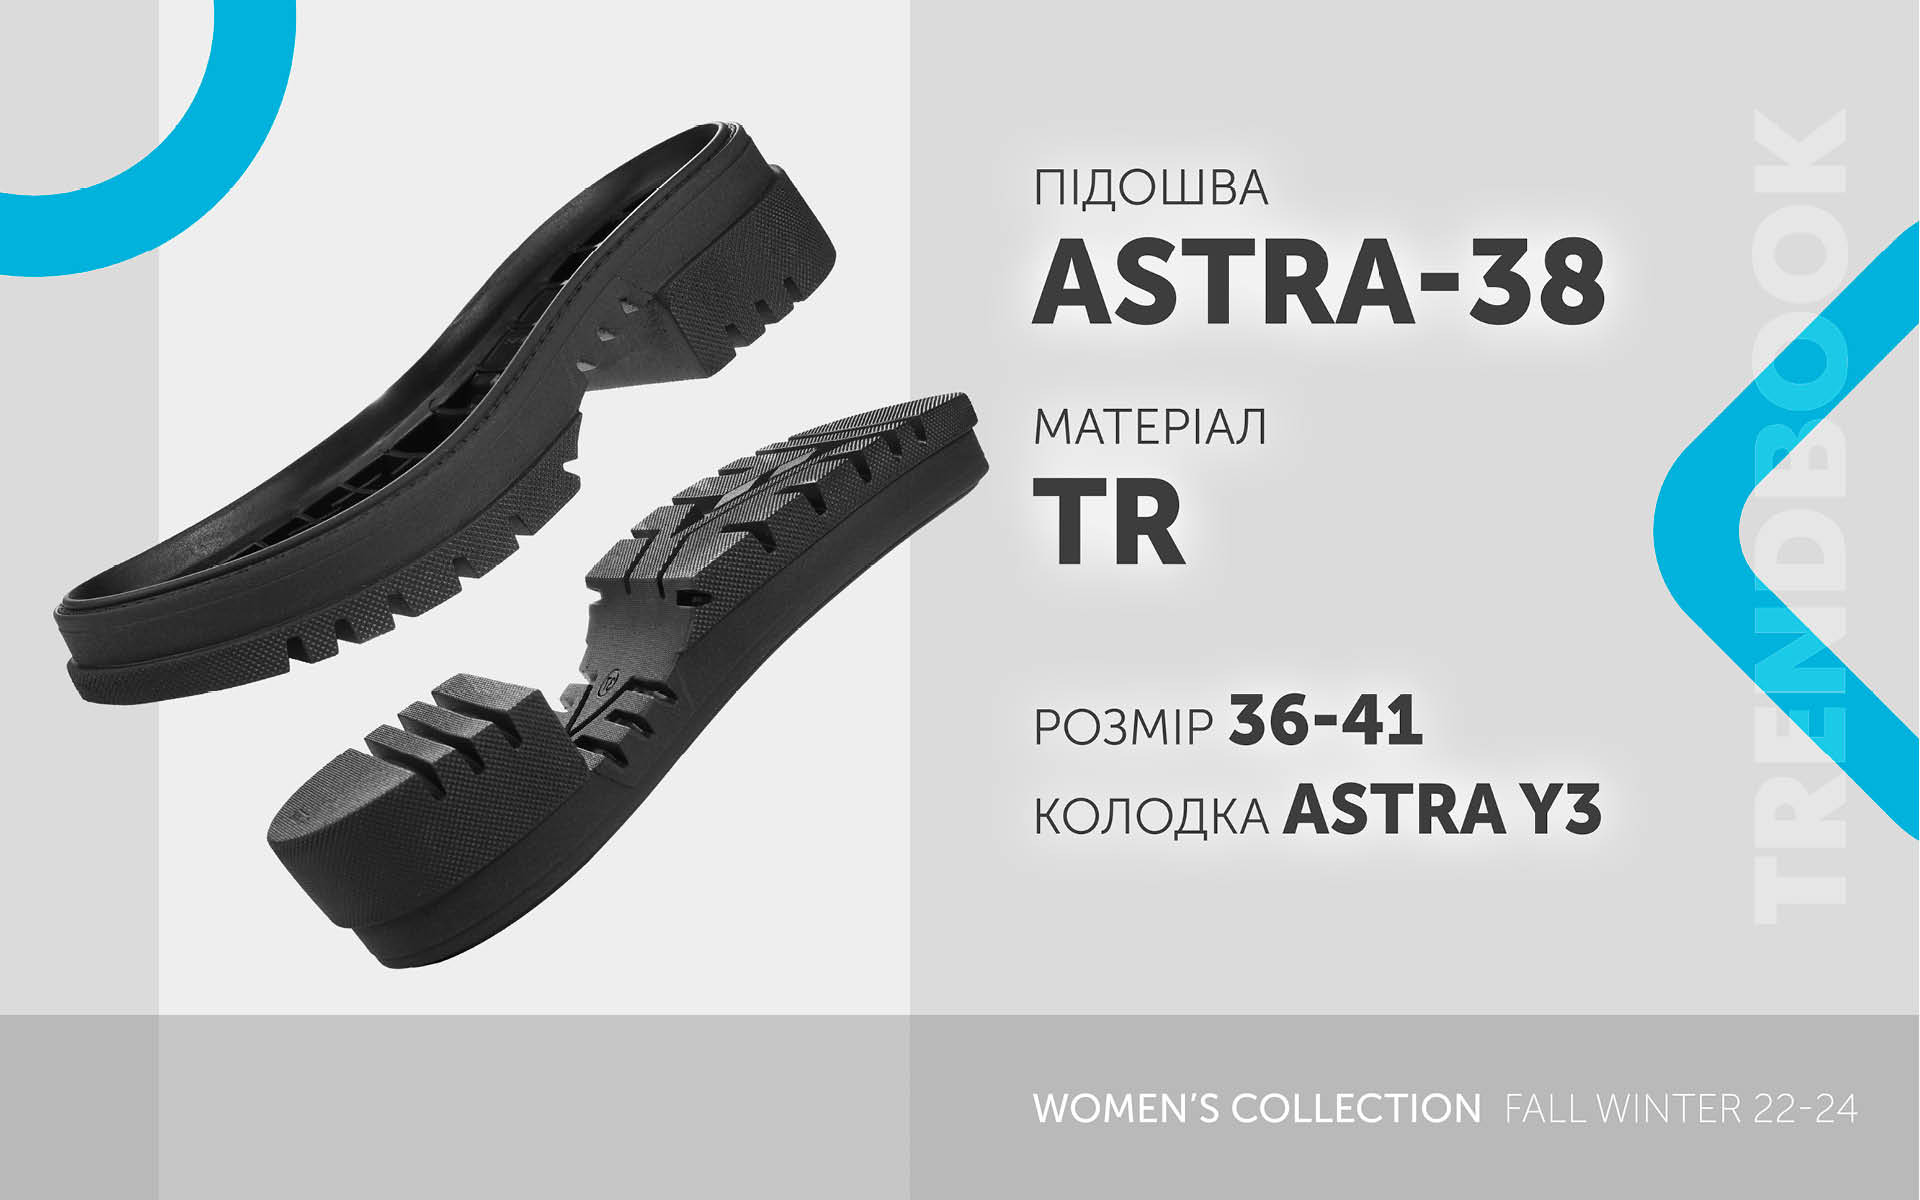 Astra-38